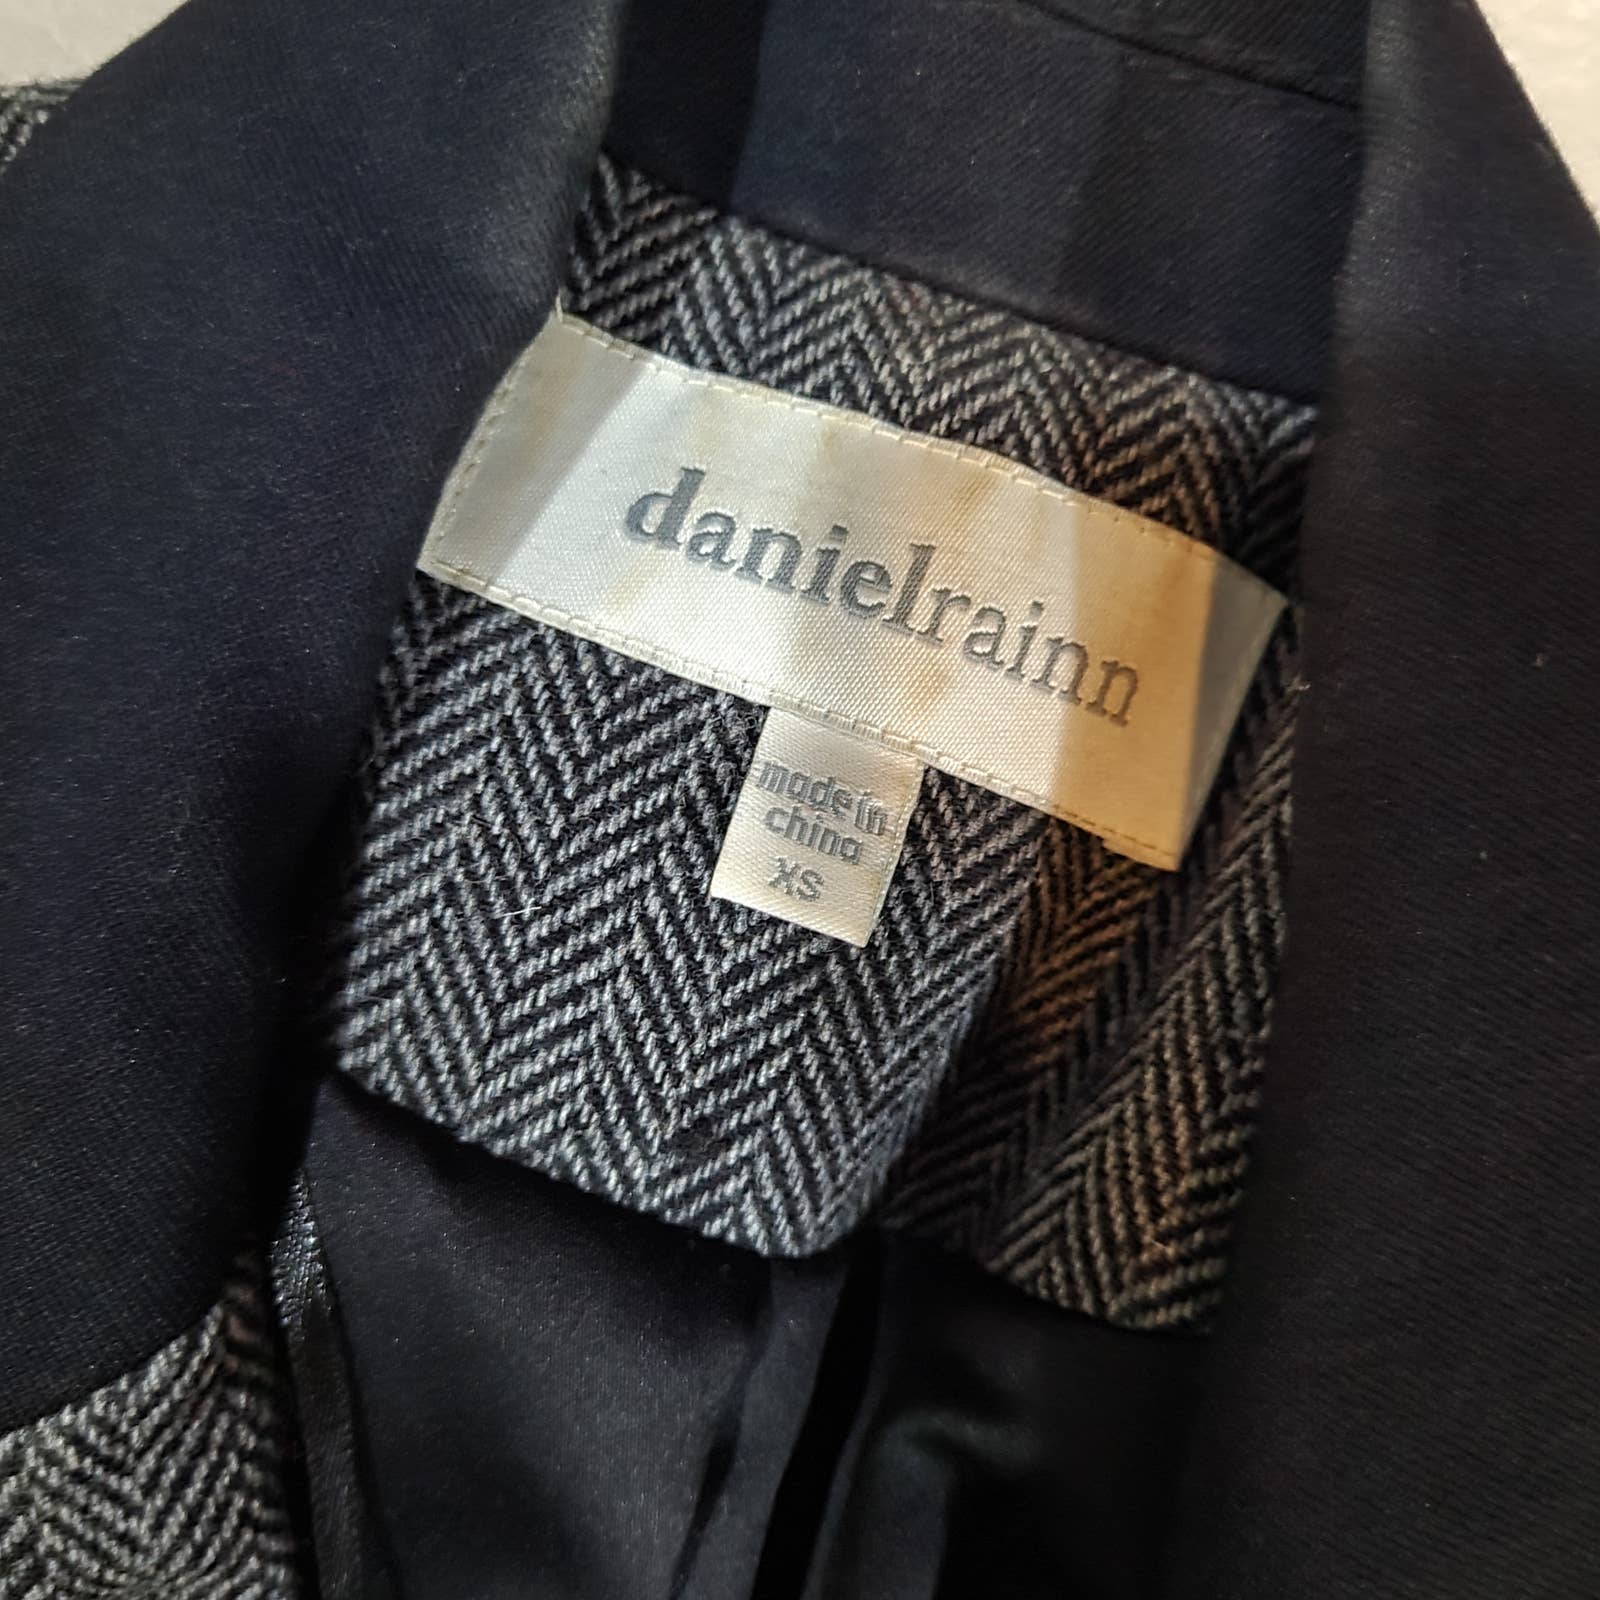 Daniel Rainn Gray and Black Colorblock Blazer - Size Extra SmallMarkita's ClosetDaniel Rainn